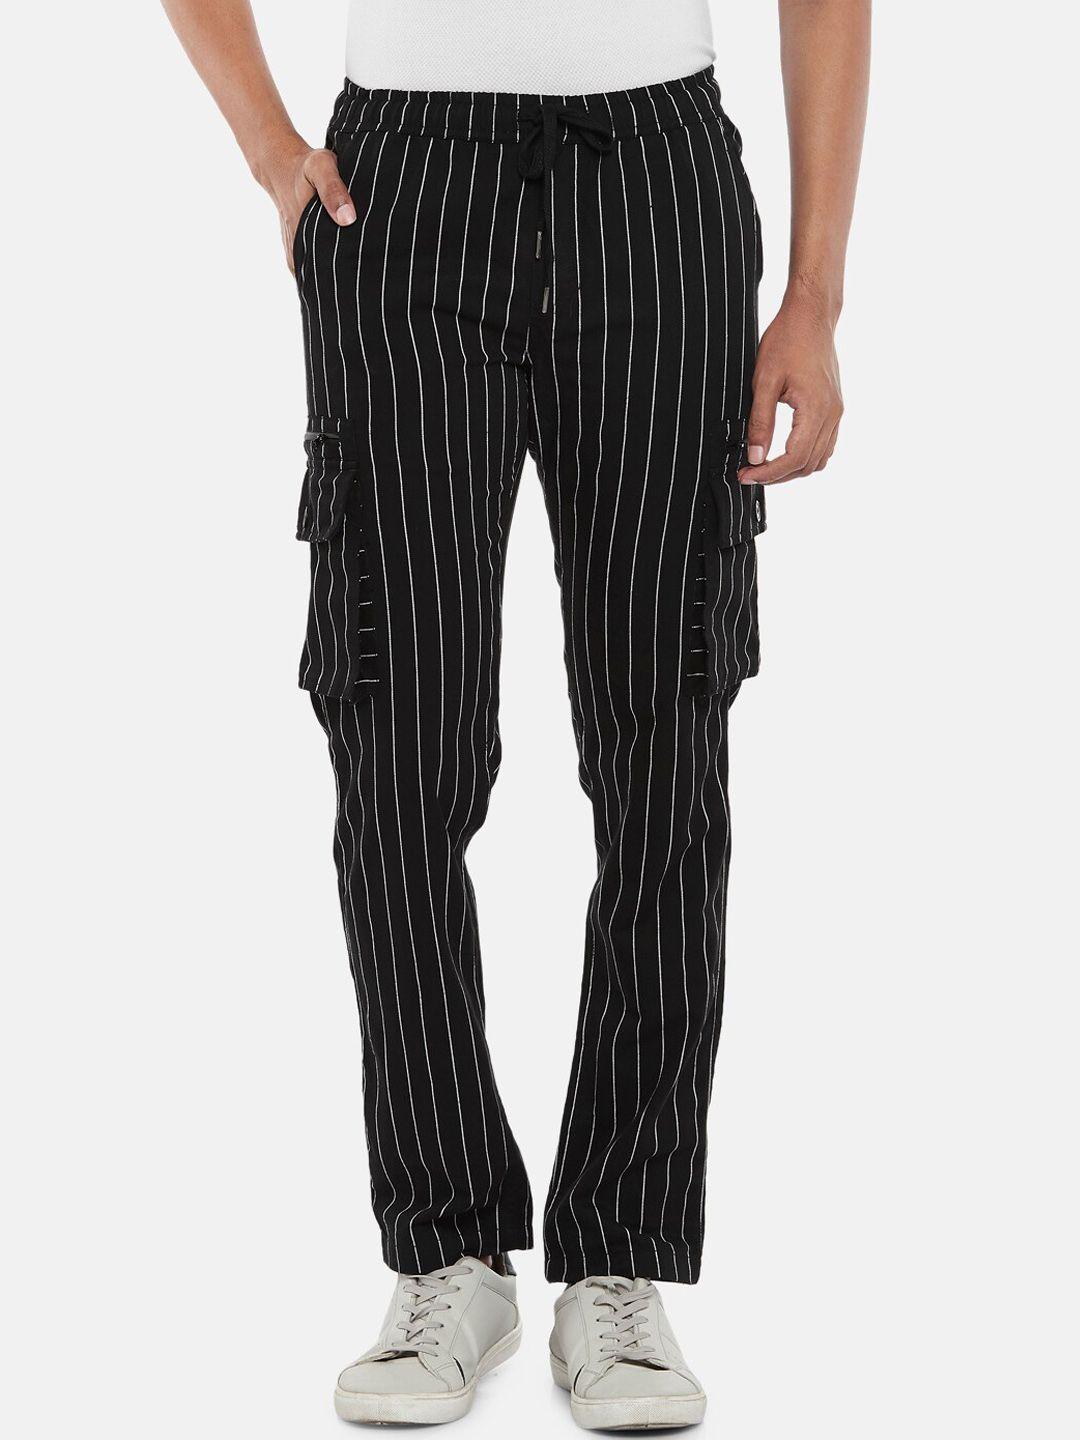 urban ranger by pantaloons men black & white striped slim fit cotton cargos trousers